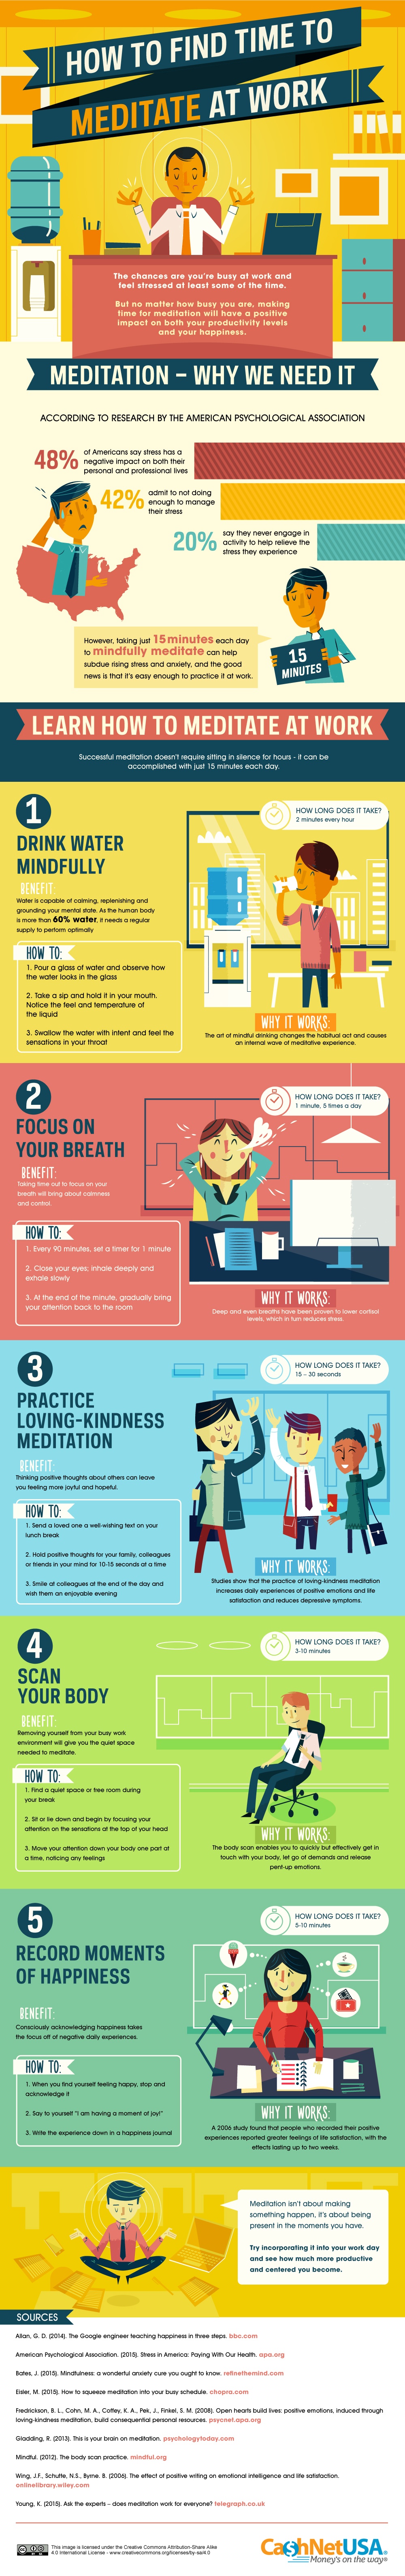 meditation-at-work-infographic.jpg